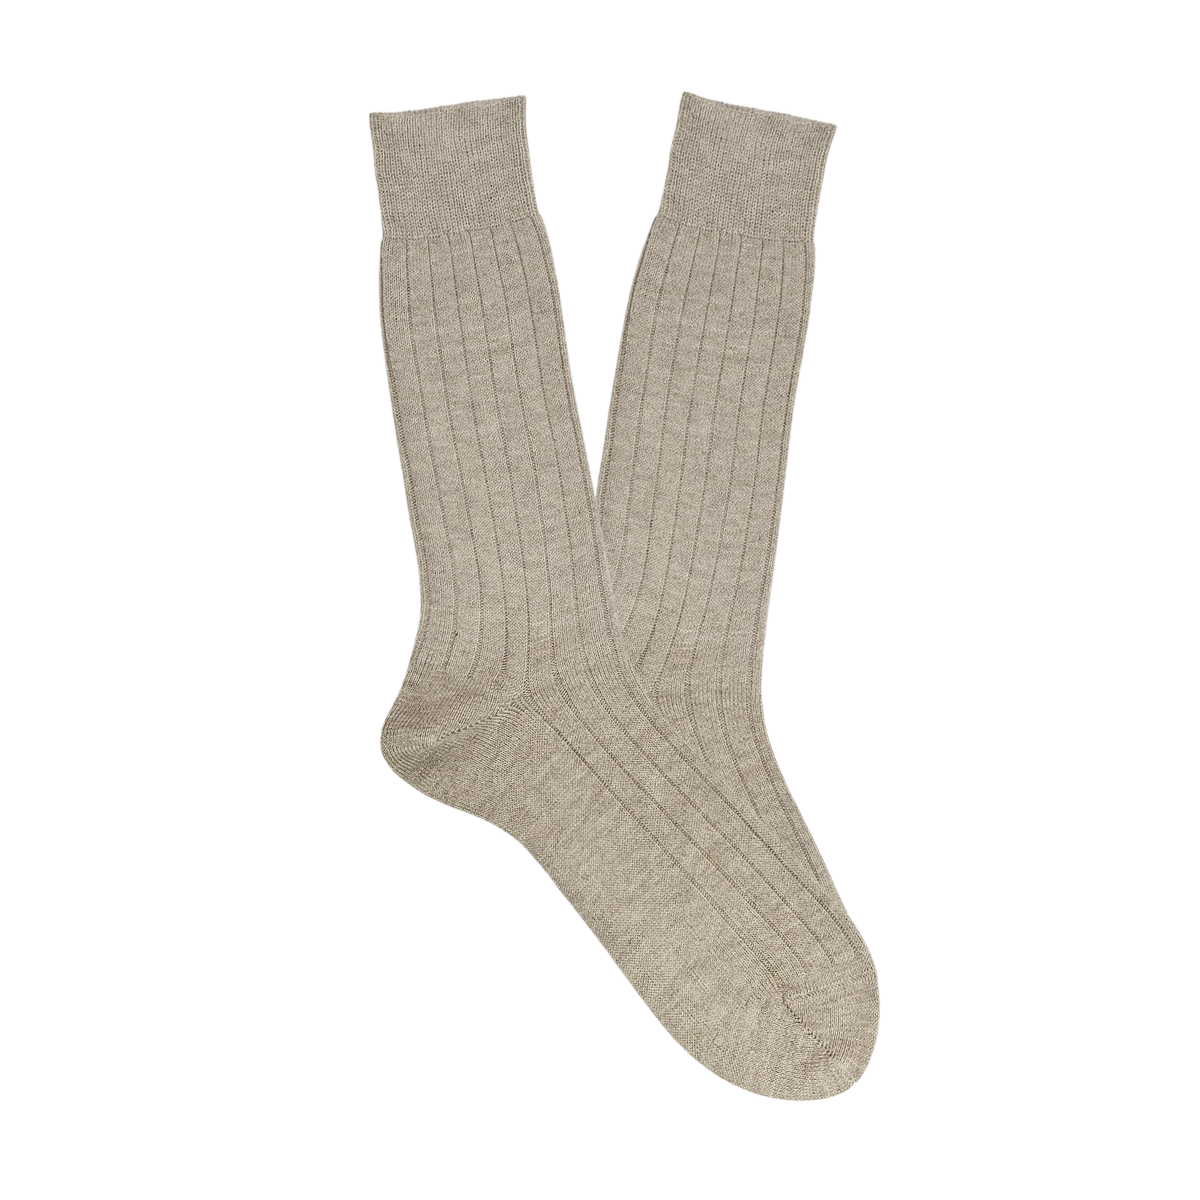 Bresciani Beige Ribbed Wool Cashmere Socks Feature